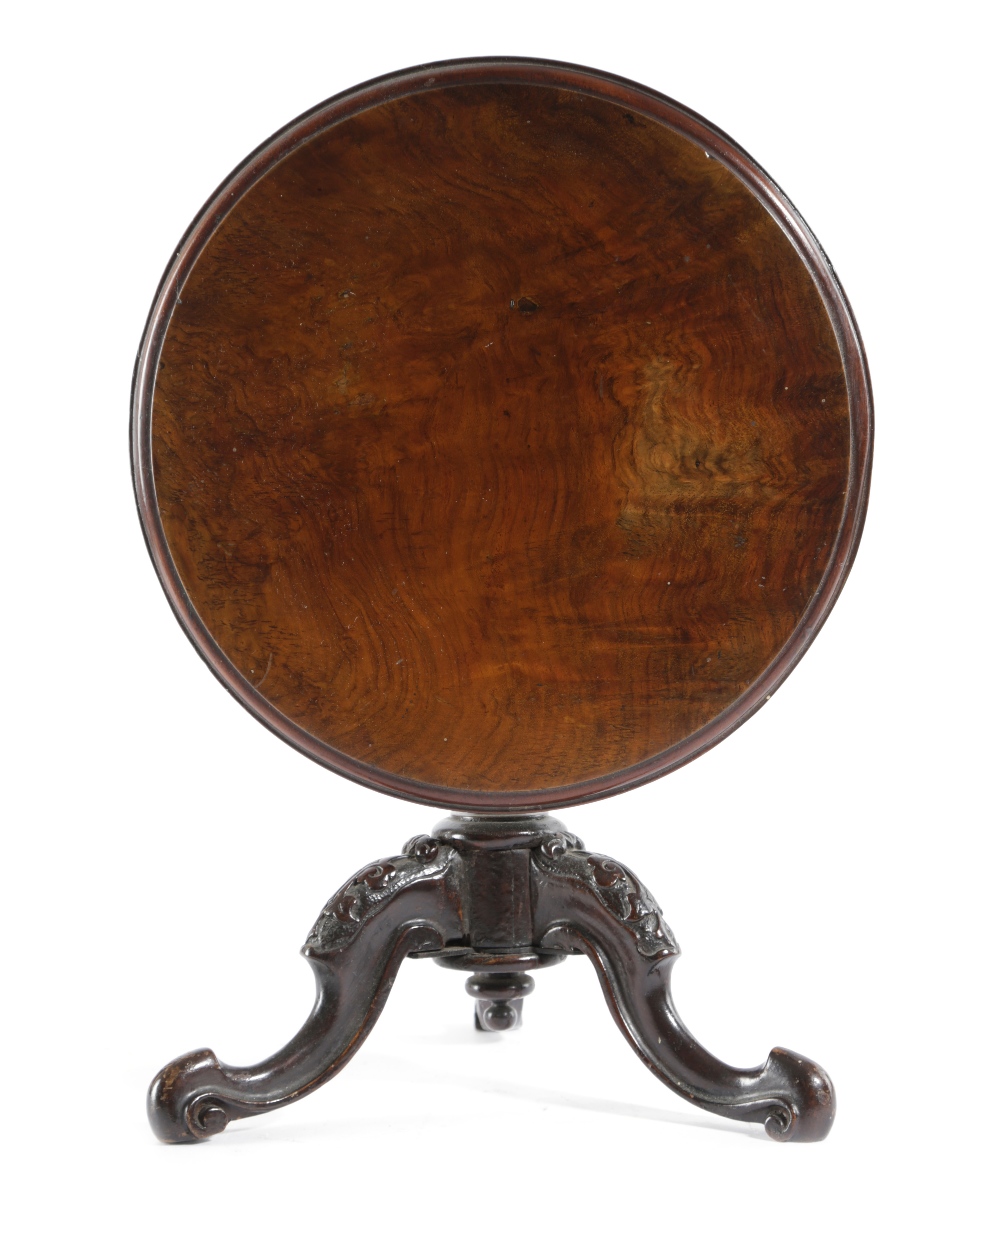 A VICTORIAN WALNUT MINIATURE BREAKFAST TABLE C.1860-70 possibly an apprentice piece, the circular